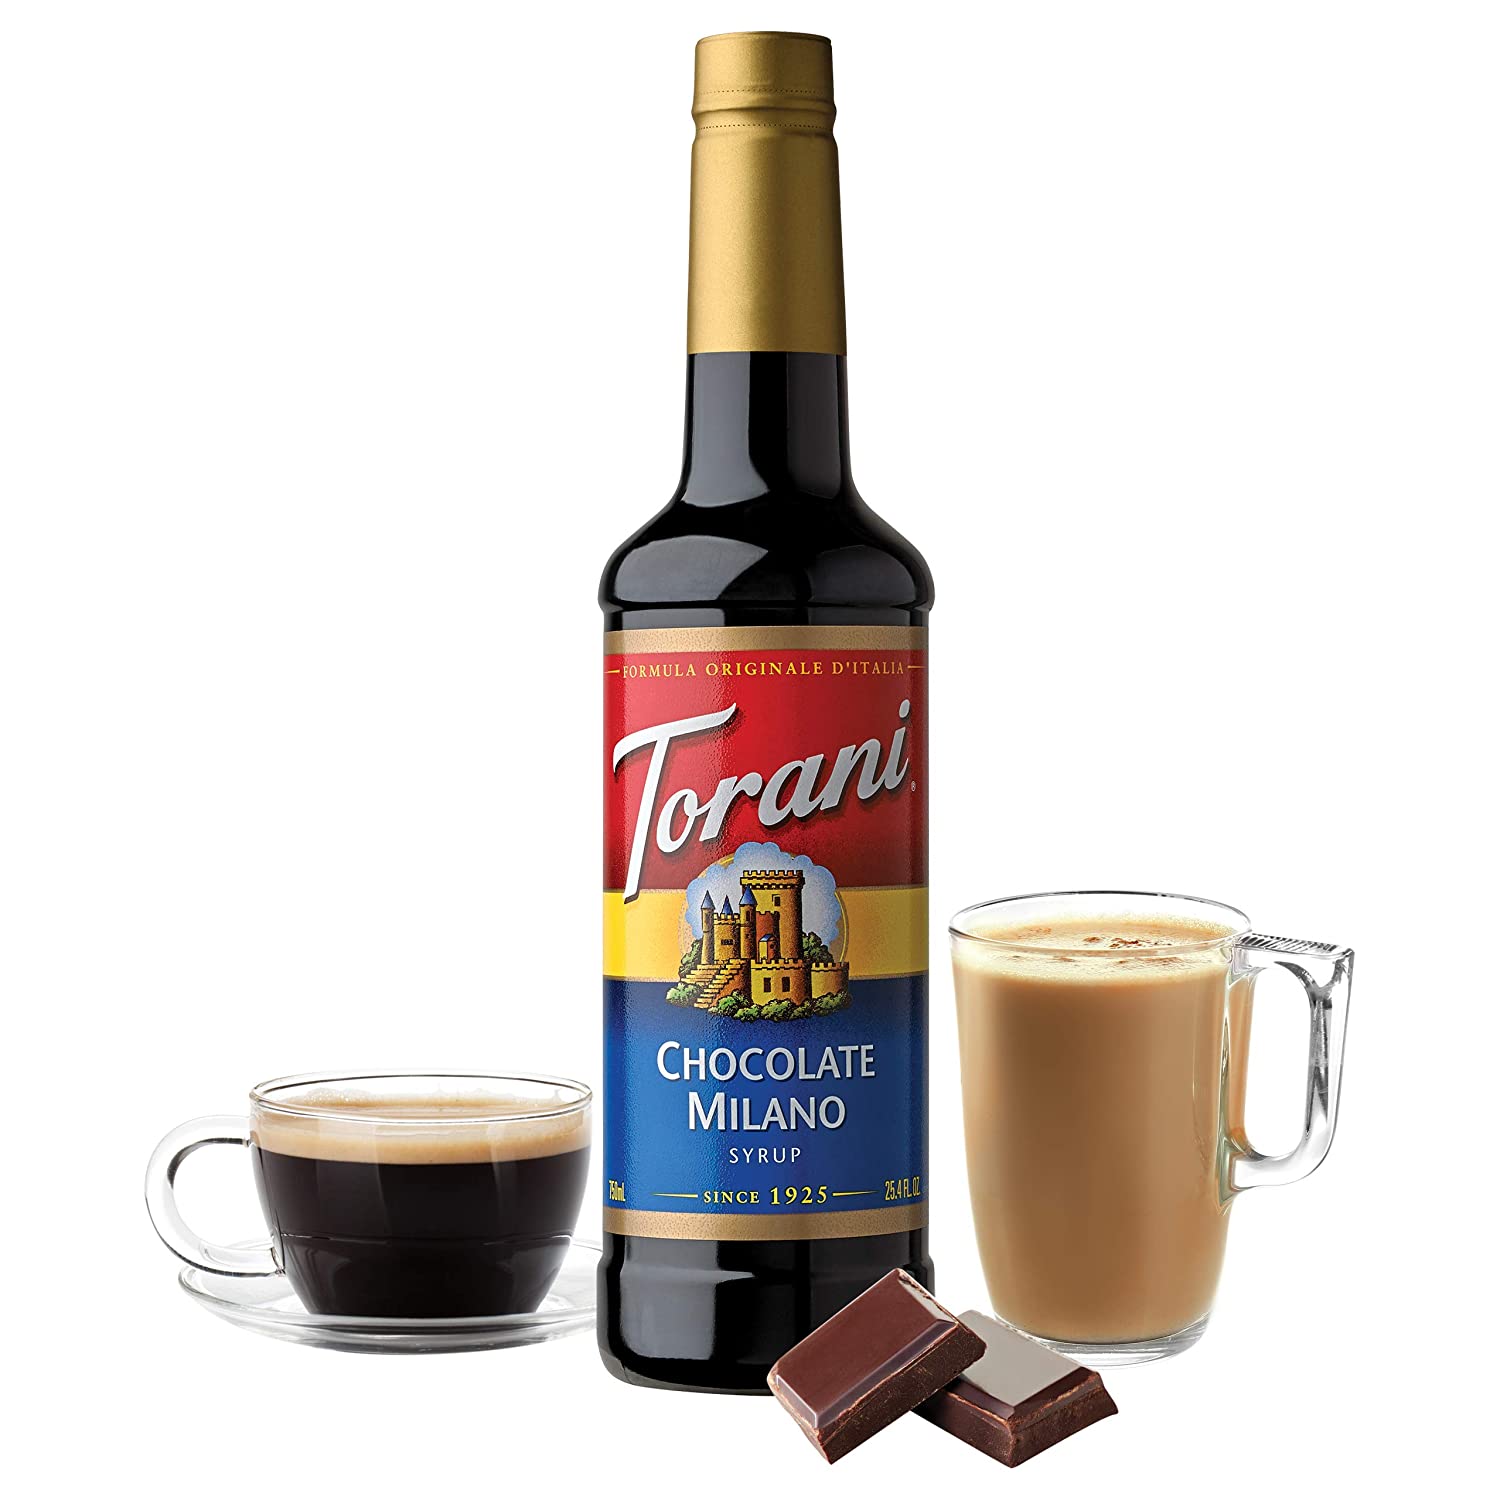 Torani Classic Flavored Syrups - 750 ml Glass Bottle: Chocolate Milano